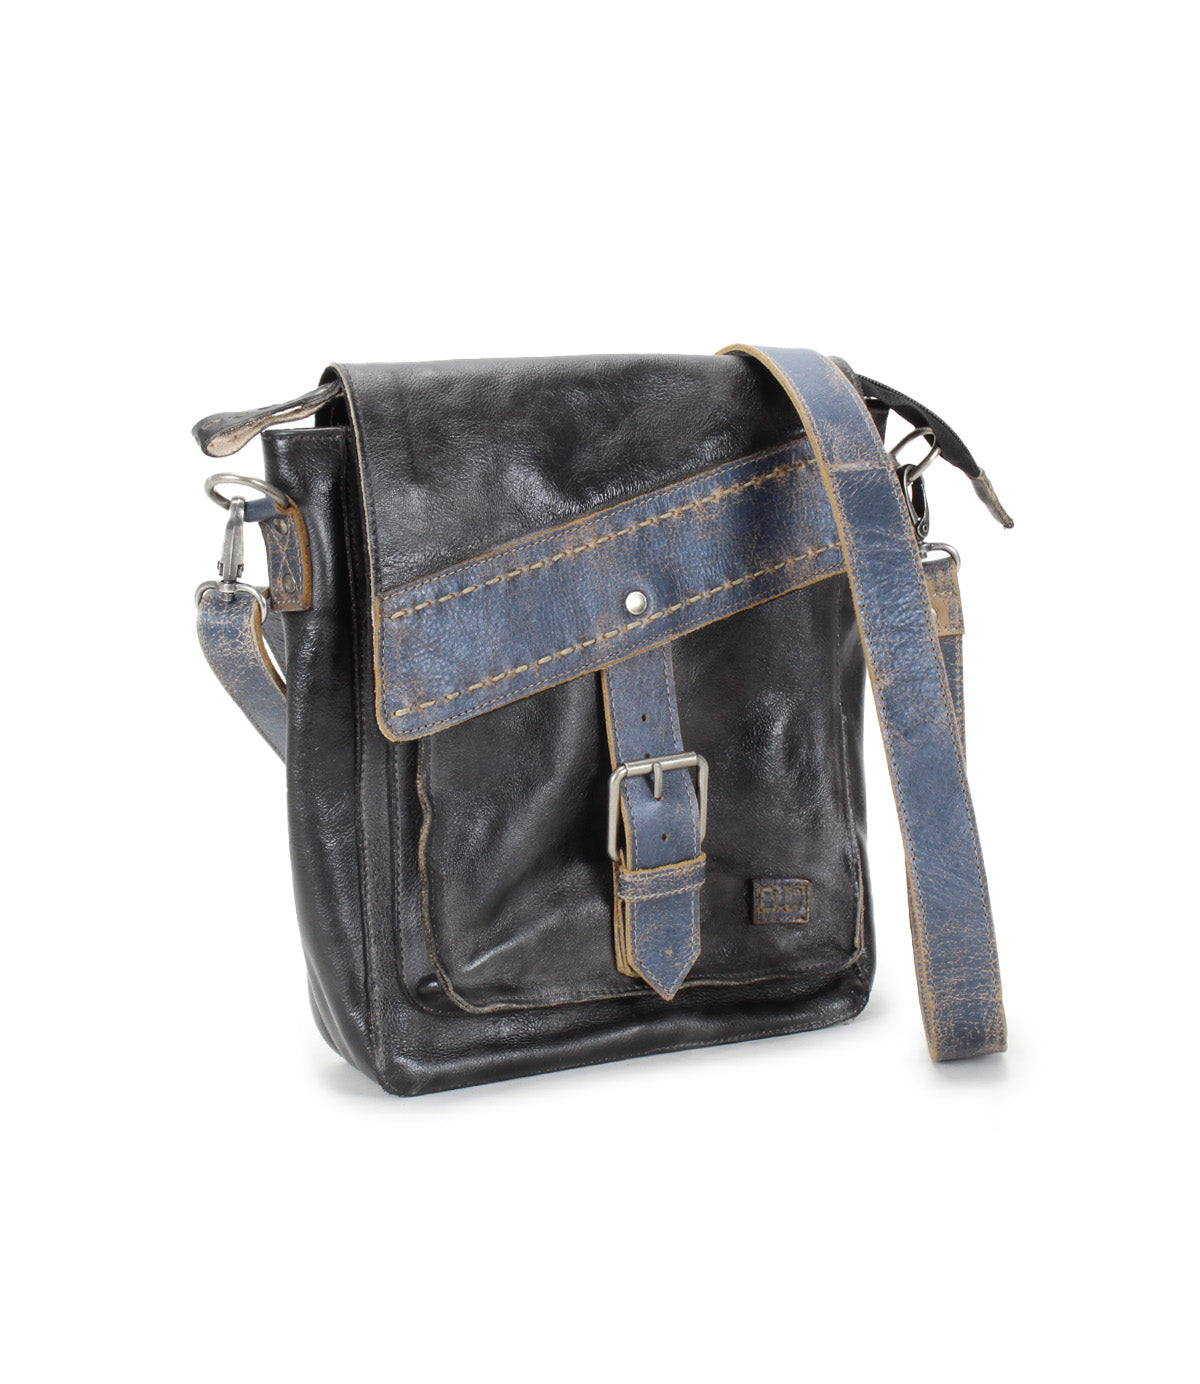 A Bed Stu Ainhoa black leather messenger bag with an adjustable strap.